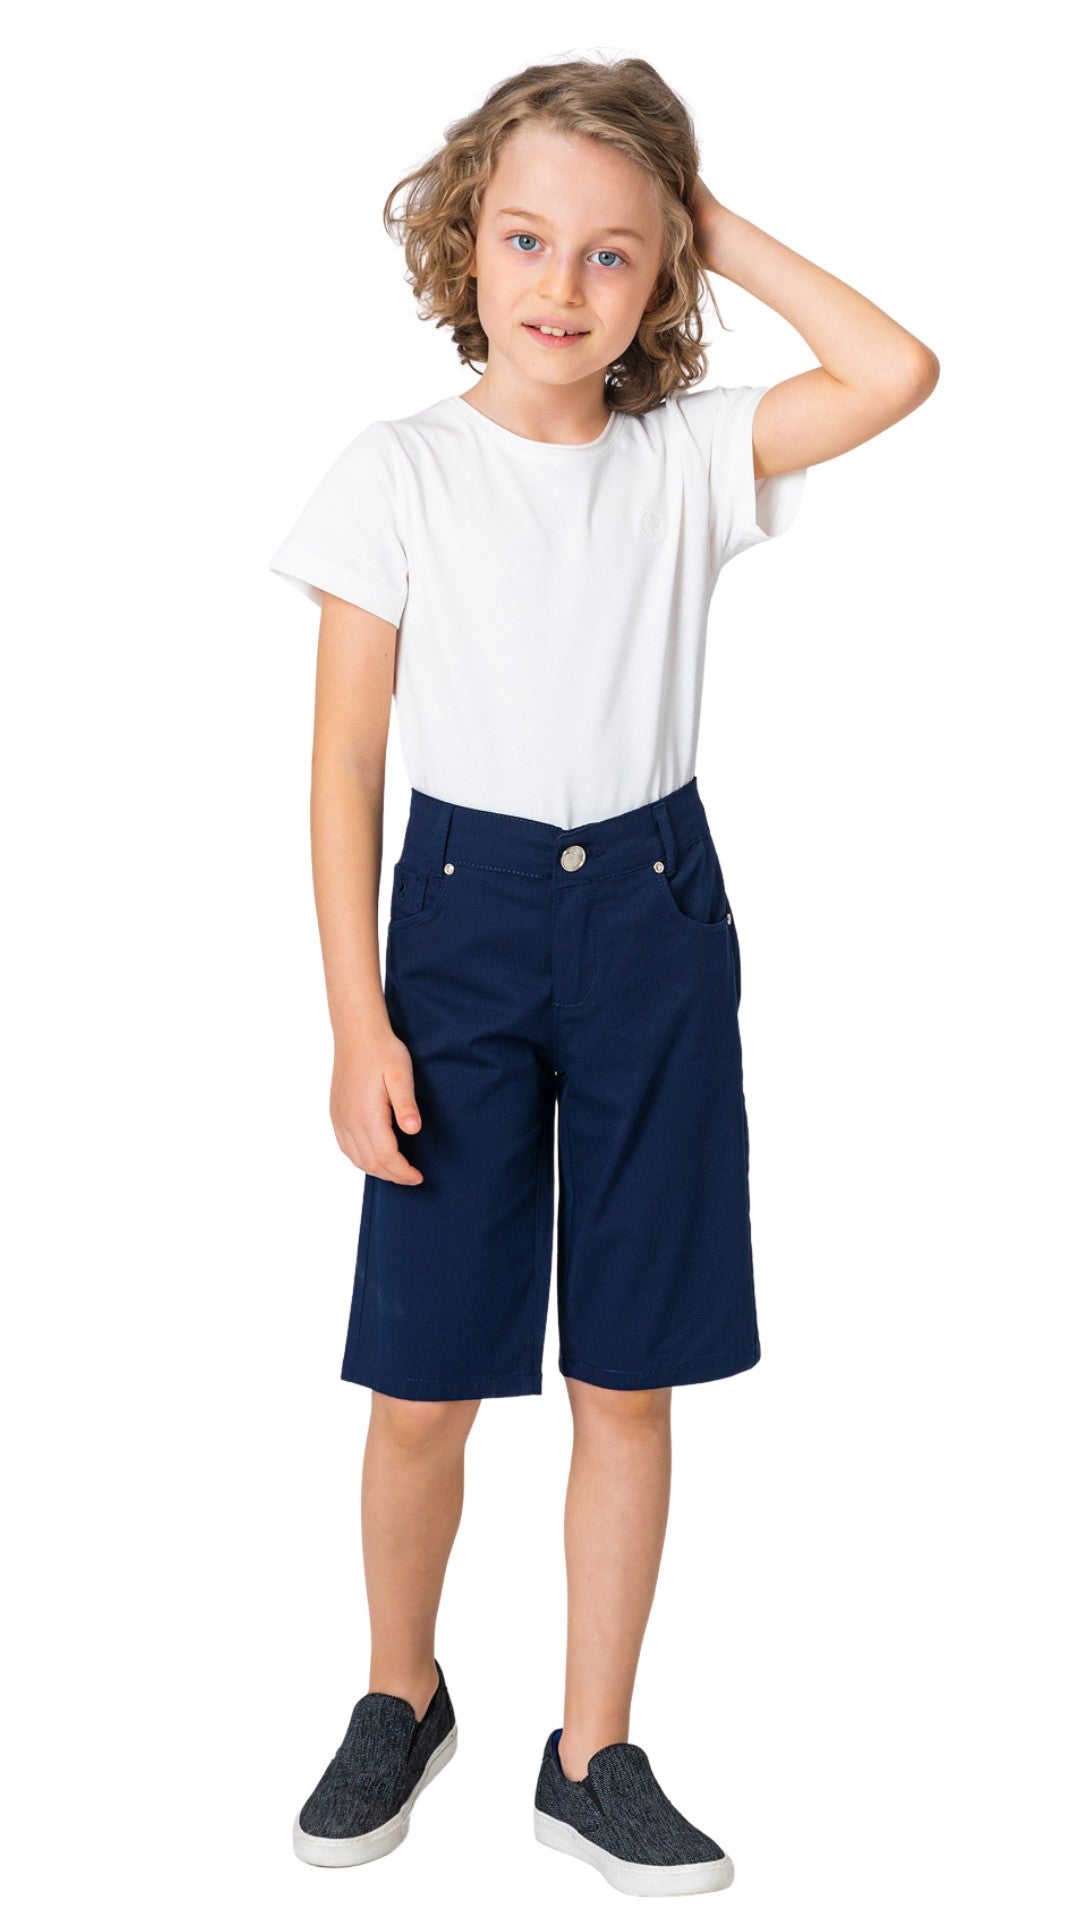 InCity Boys Tween 7-14 Years Regular Fit Casual Cotton Focus Shorts InCity Boys Girls